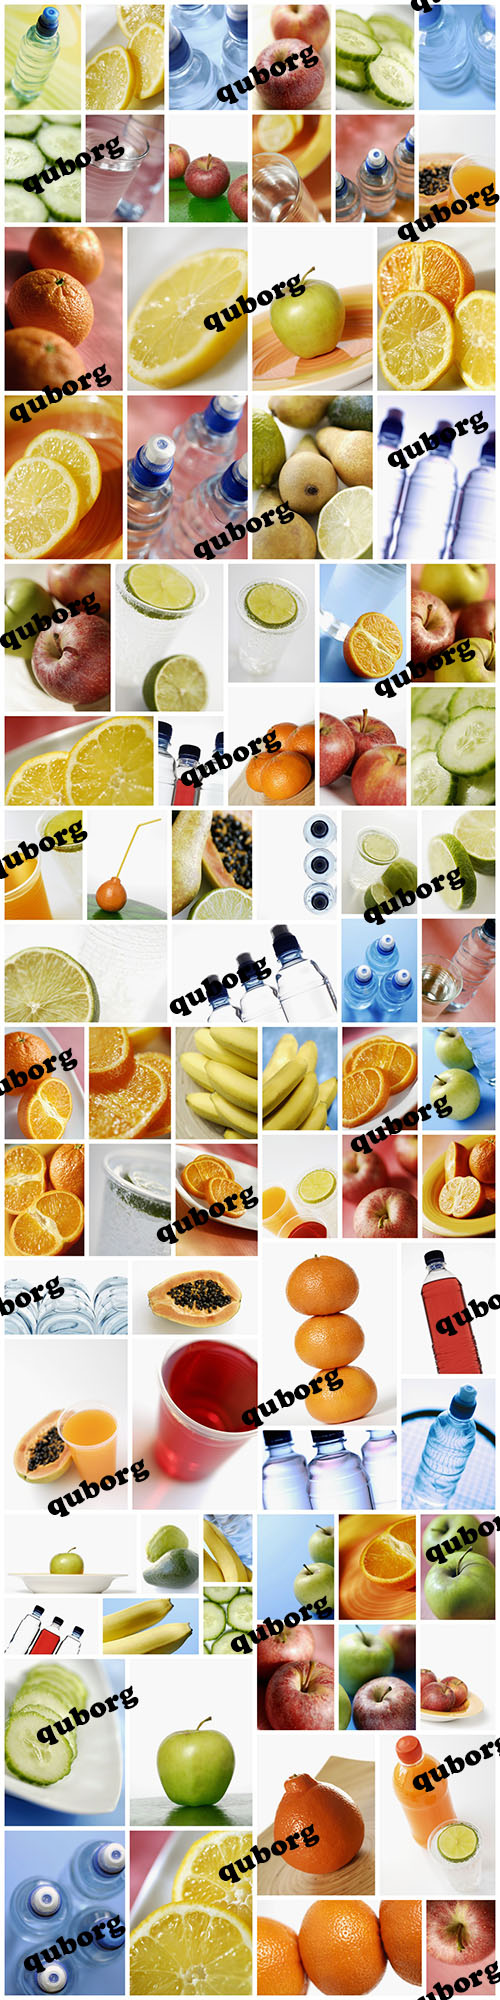 Stock Photos - Fresh Fruit